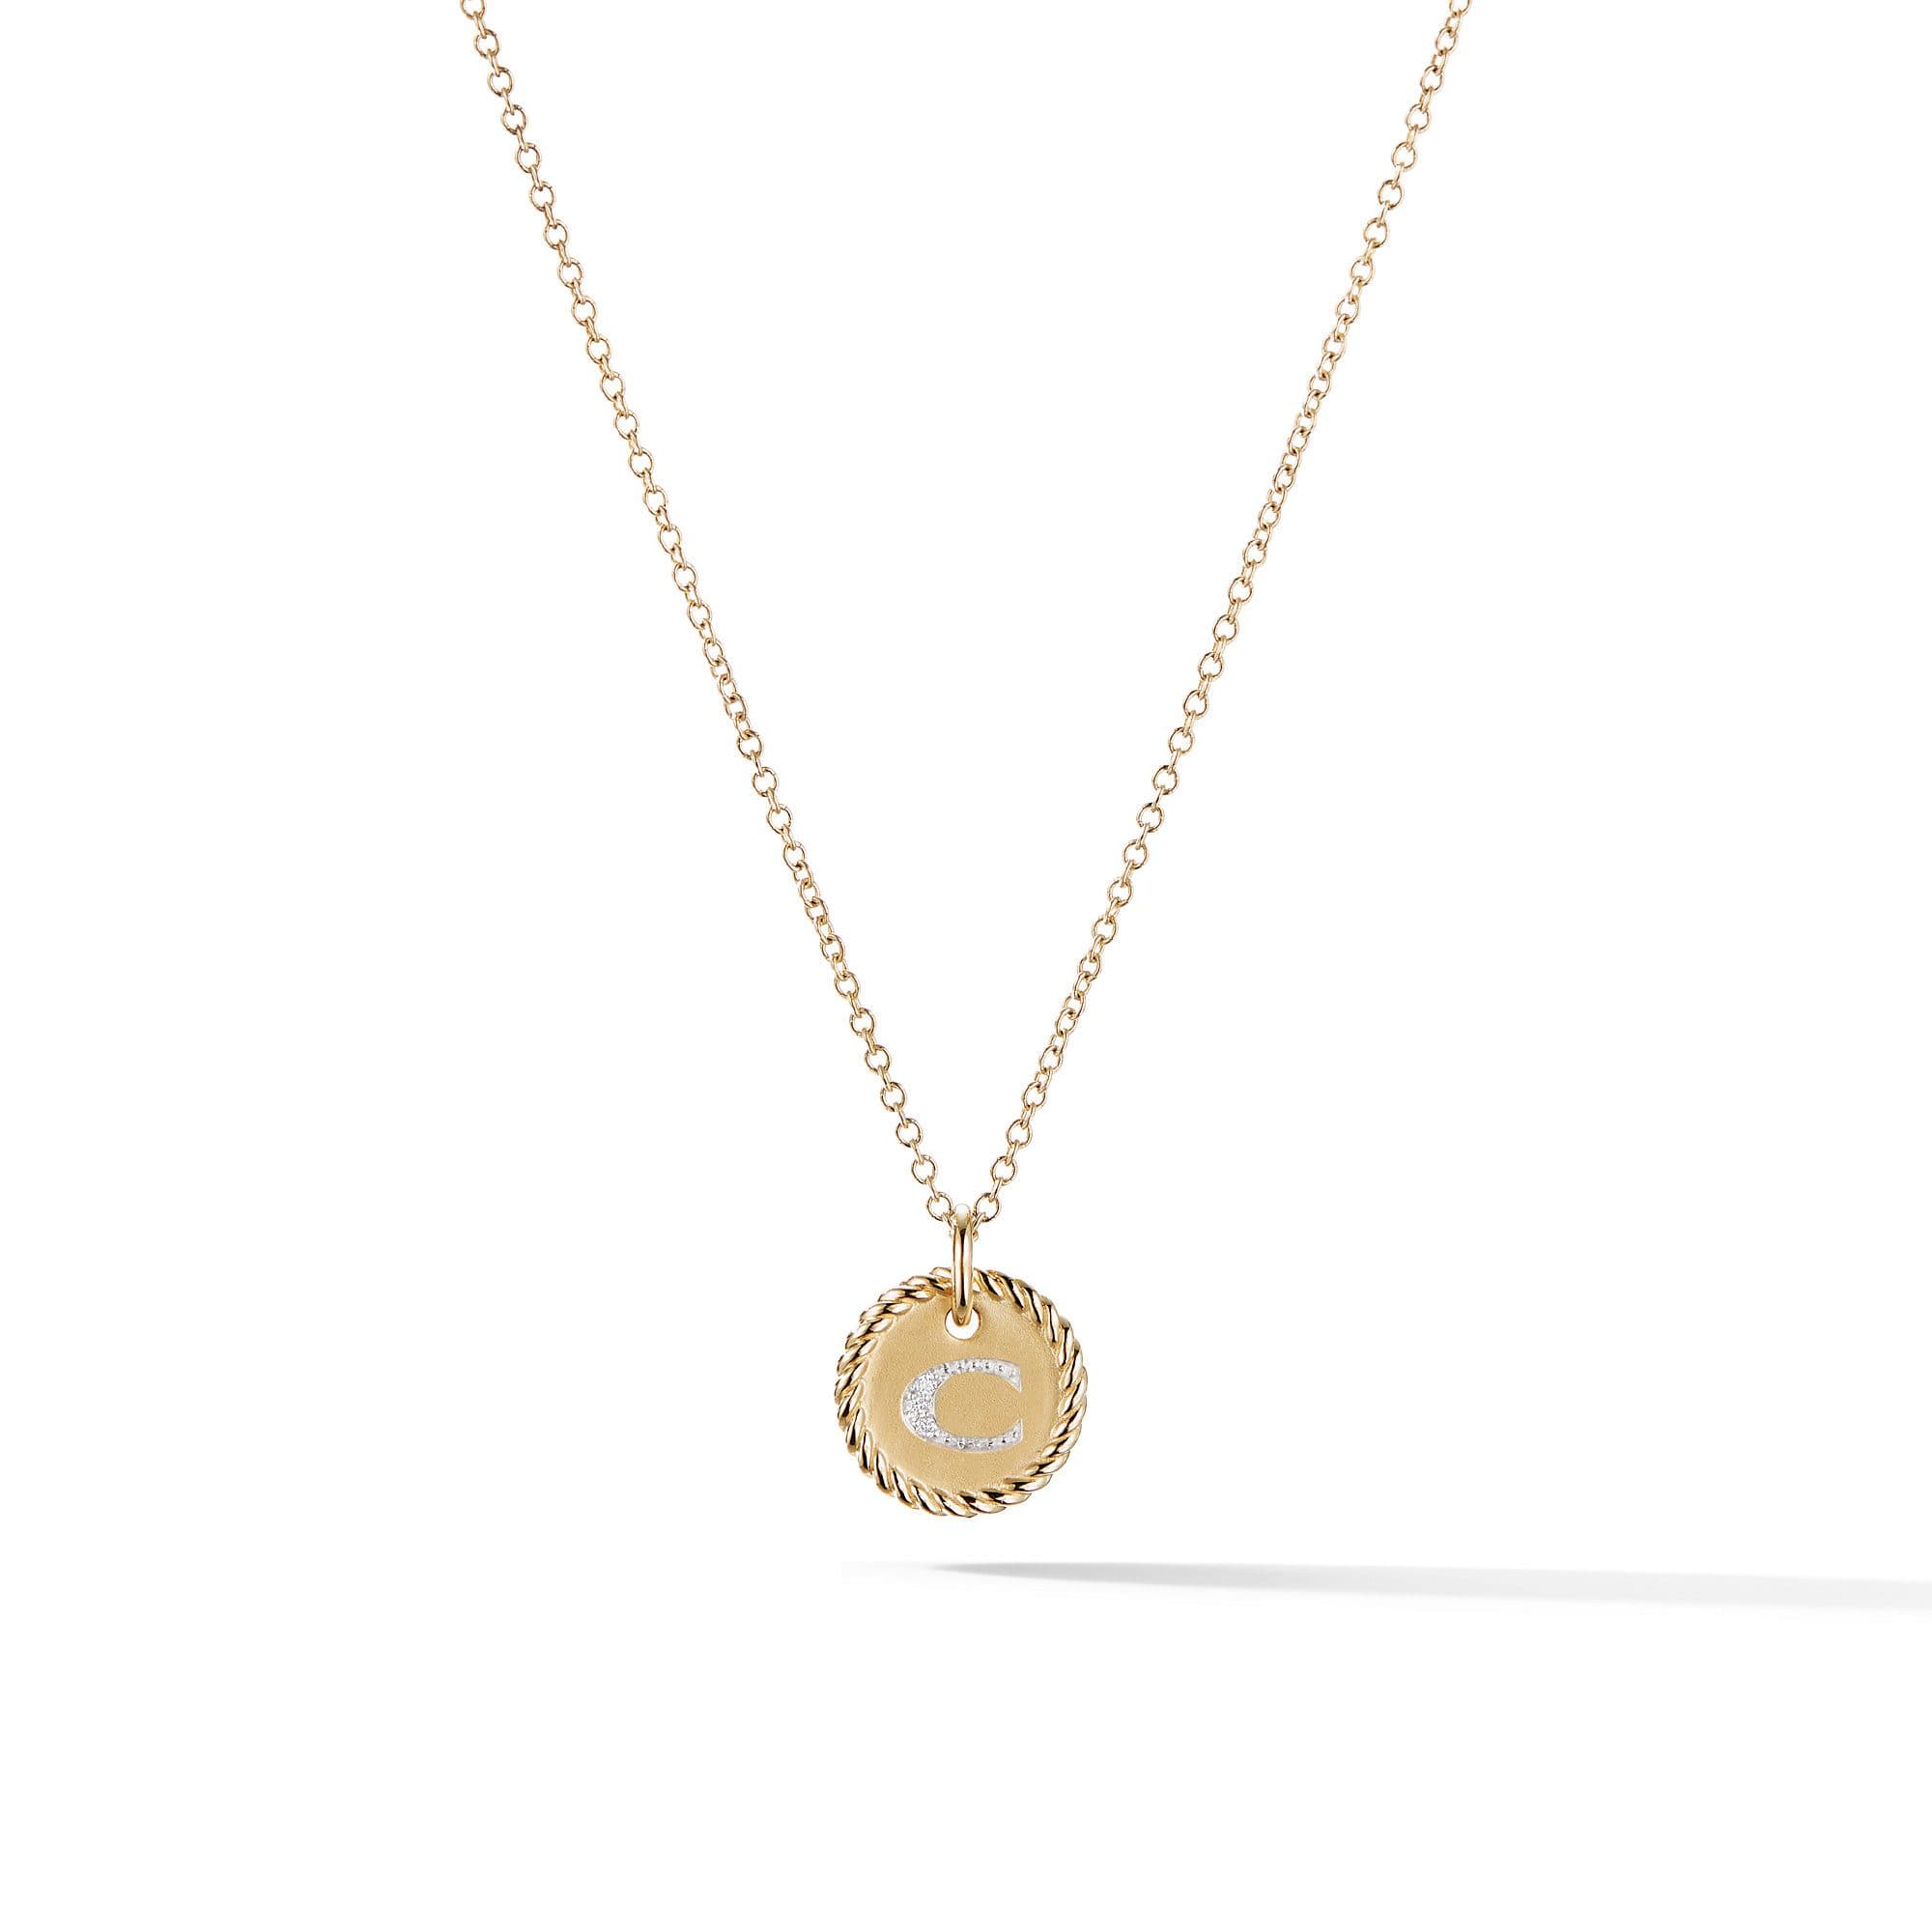 David Yurman C Initial Charm Necklace in 18k Yellow Gold with Diamonds